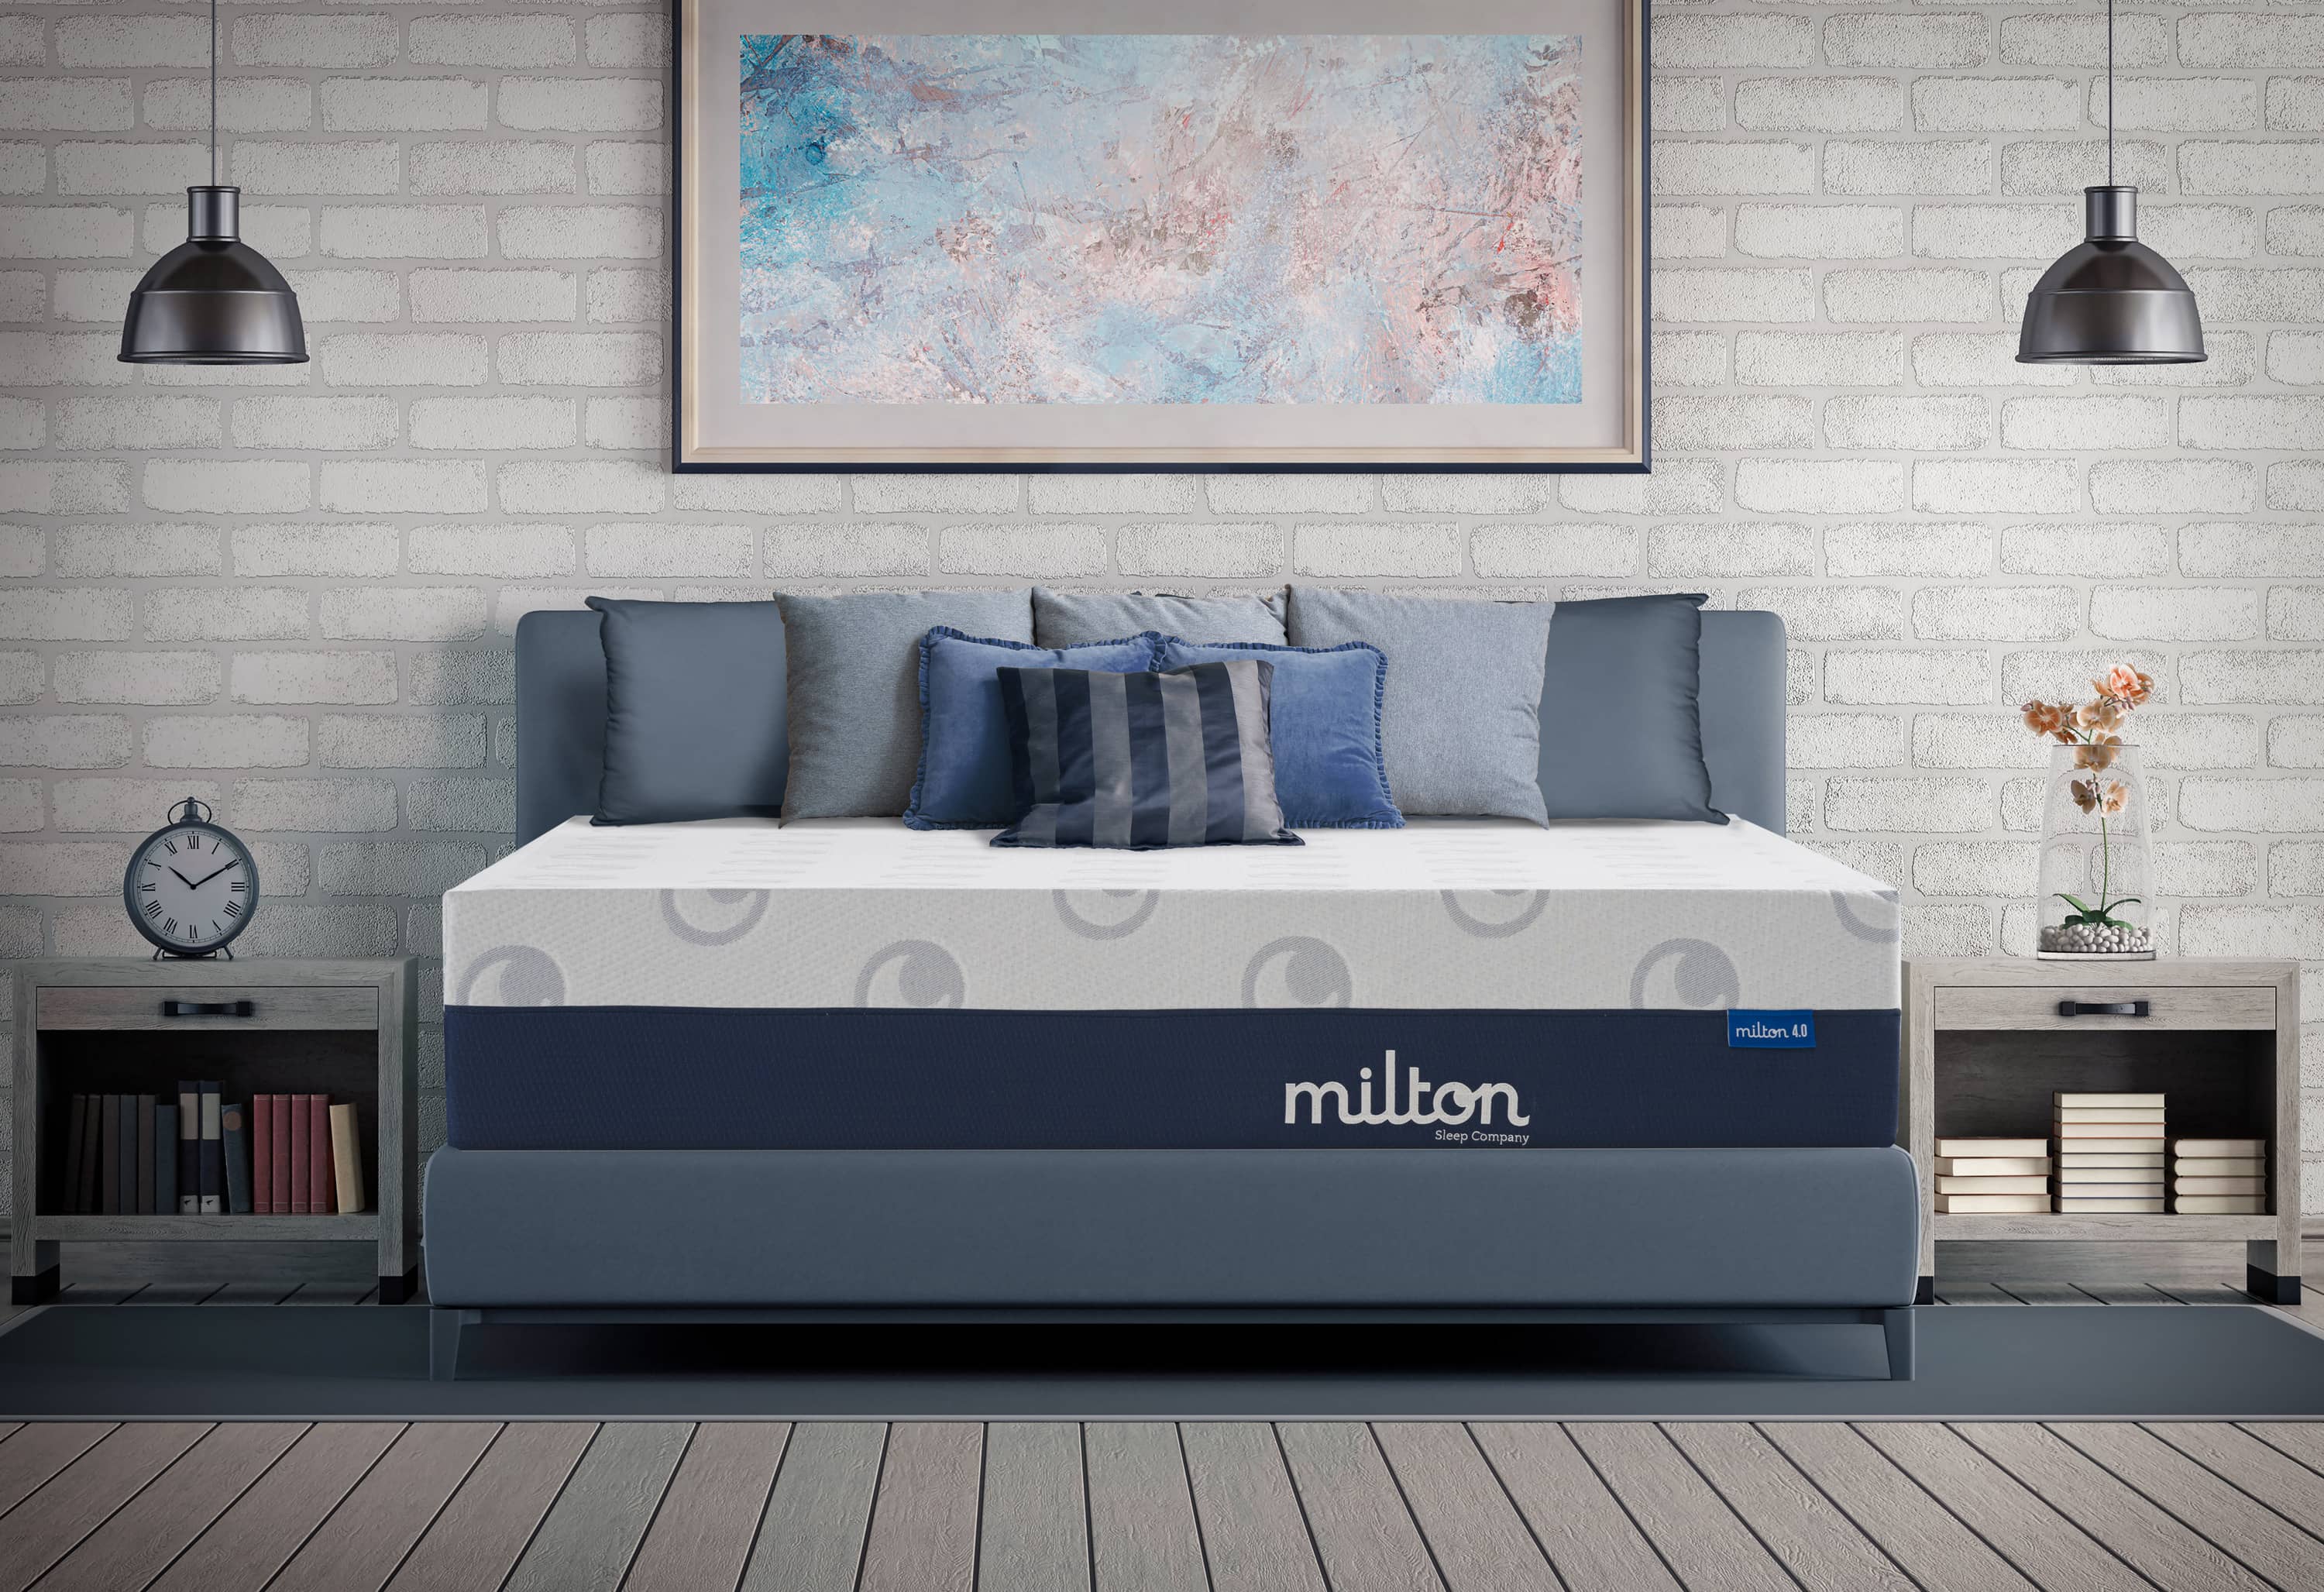 Milton 4.0 - Milton Sleep Company